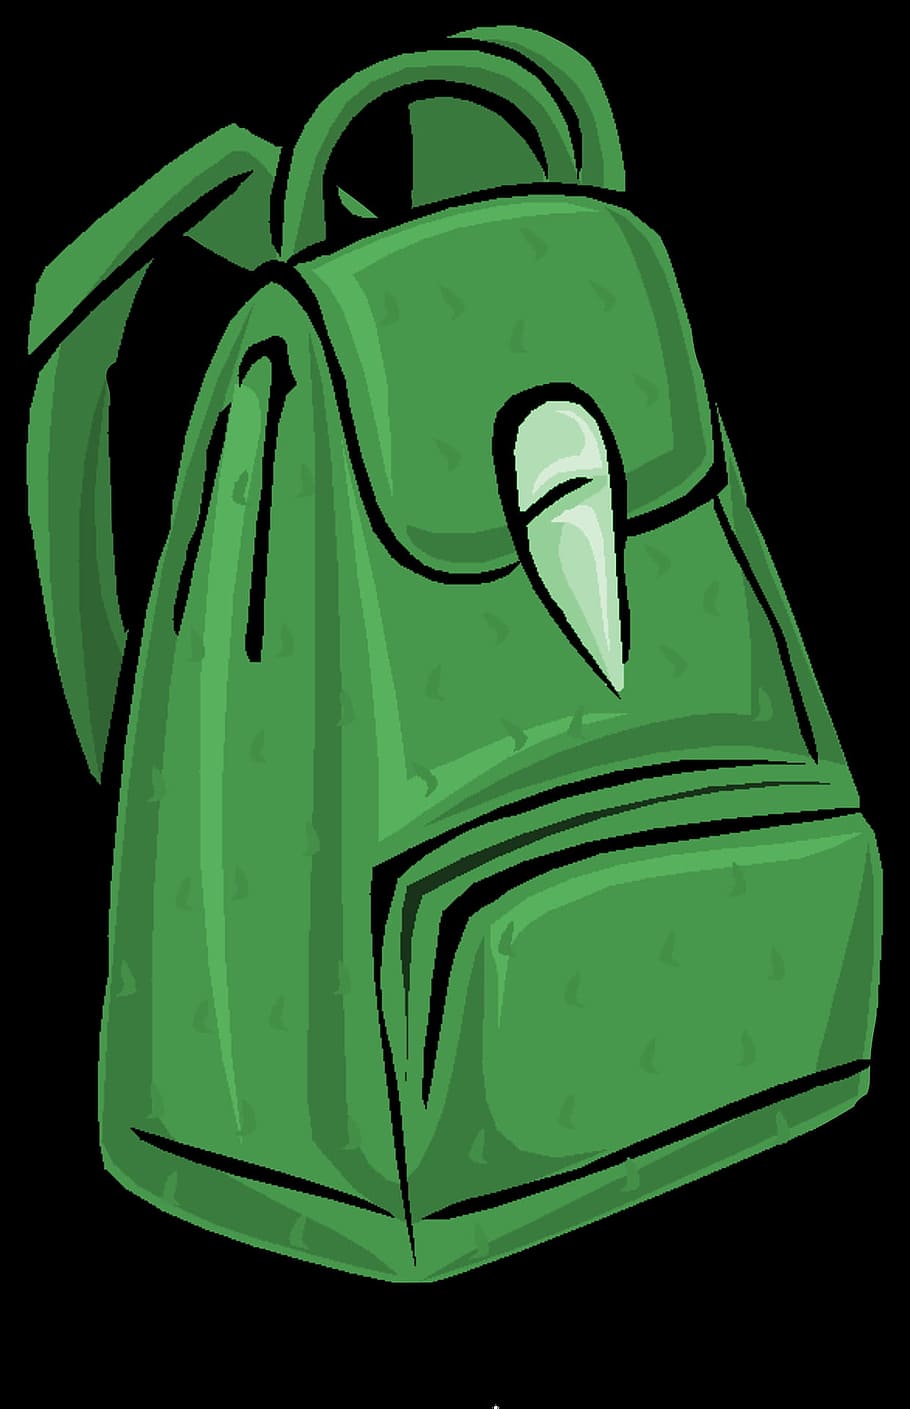 verde, bolso, mochila, gráfico, deporte, color verde, fondo negro, ninguna persona, primer plano, tiro de estudio